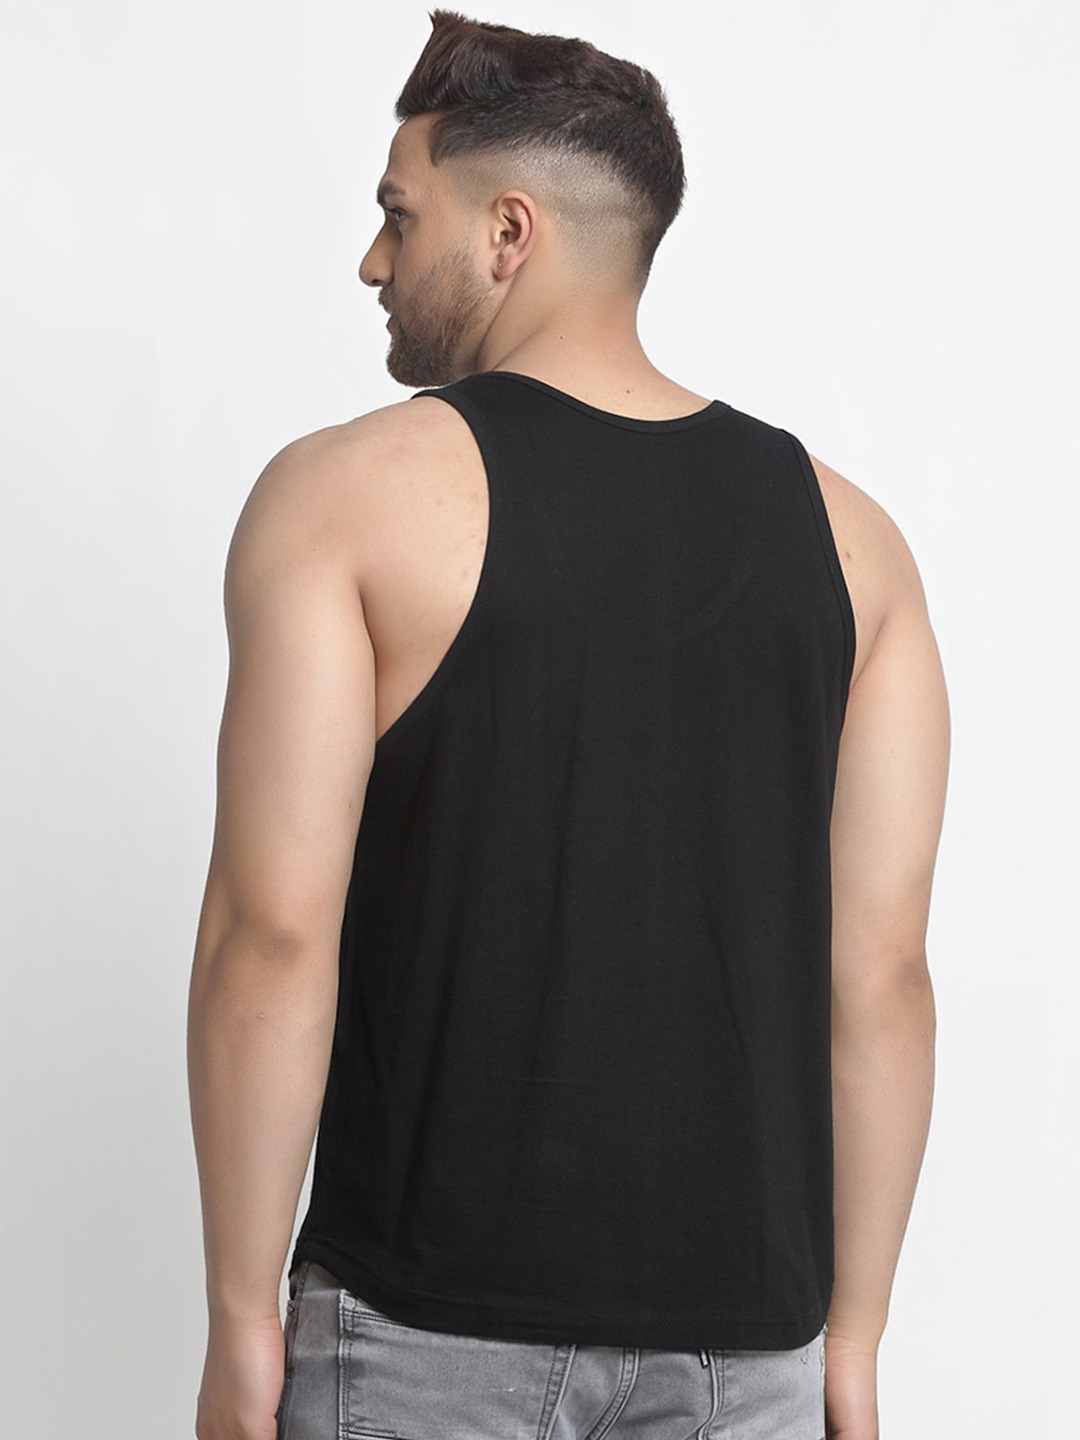 Clothing Innerwear Vests | Friskers Men Pack Of 2 Printed Pure Cotton Drop Cut Innerwear Vests - XZ37428